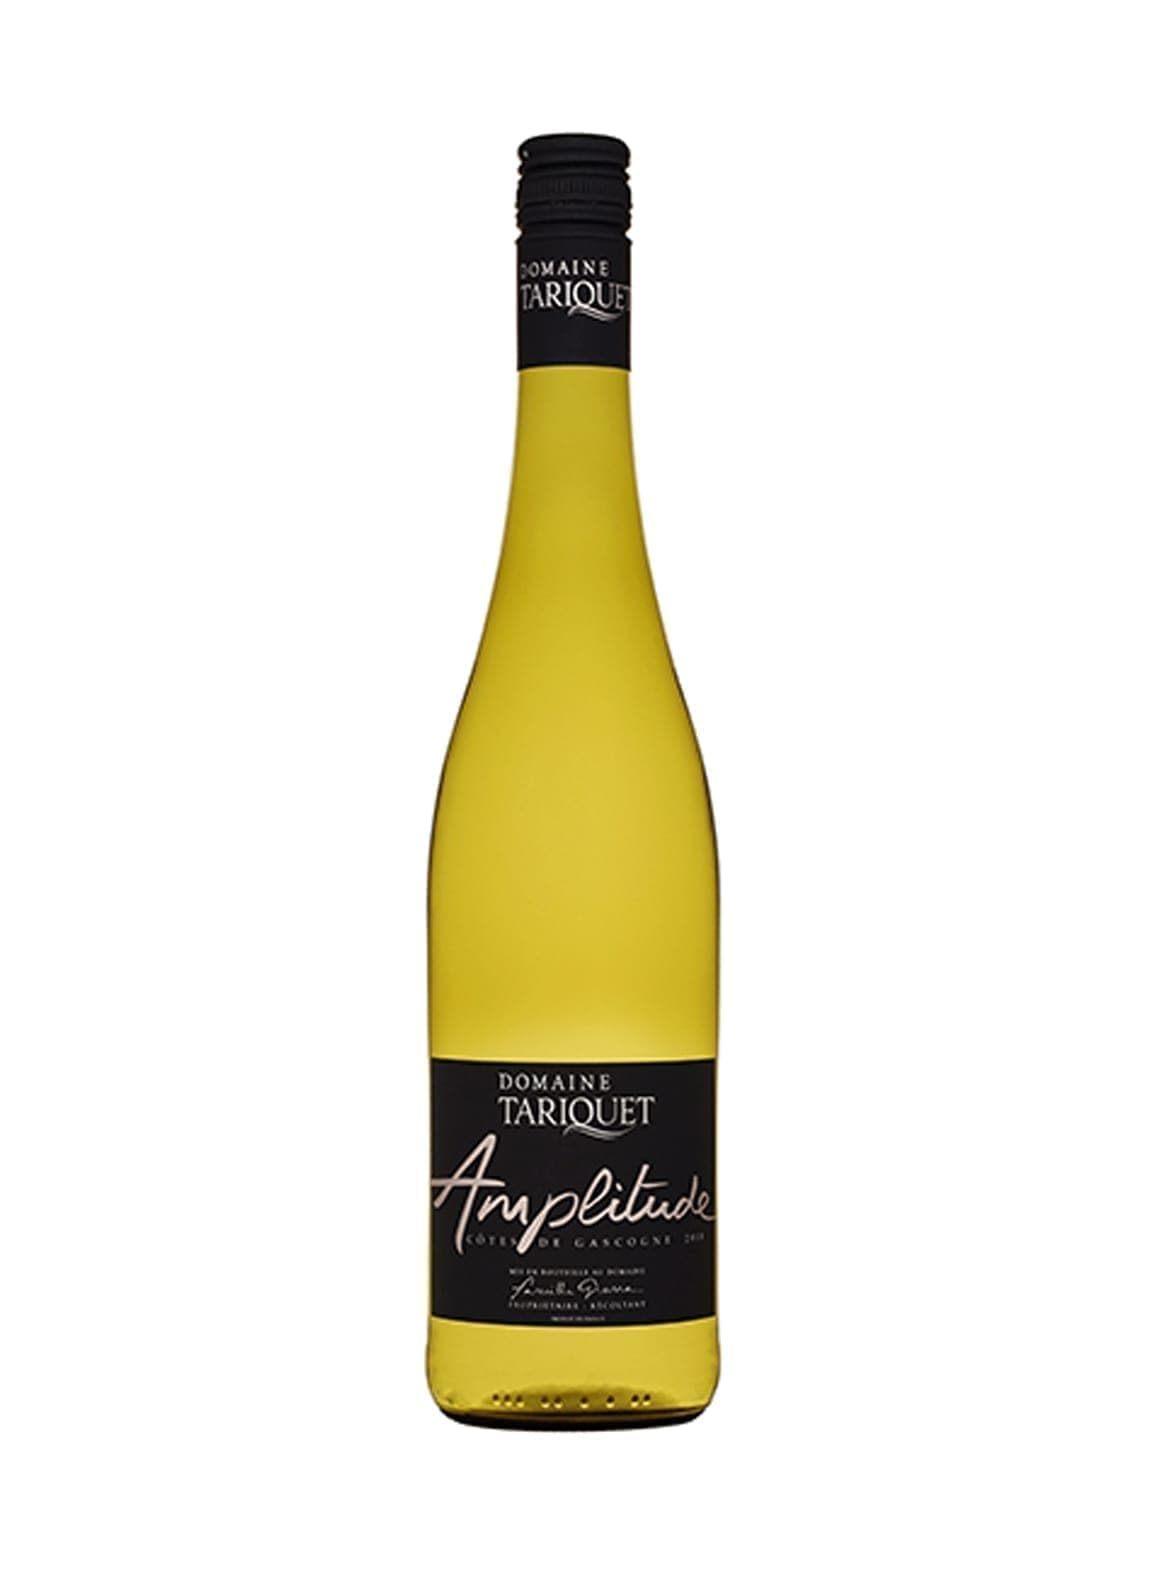 Domaine Tariquet White Wine Amplitude 12.5% 750ml | Wine | Shop online at Spirits of France